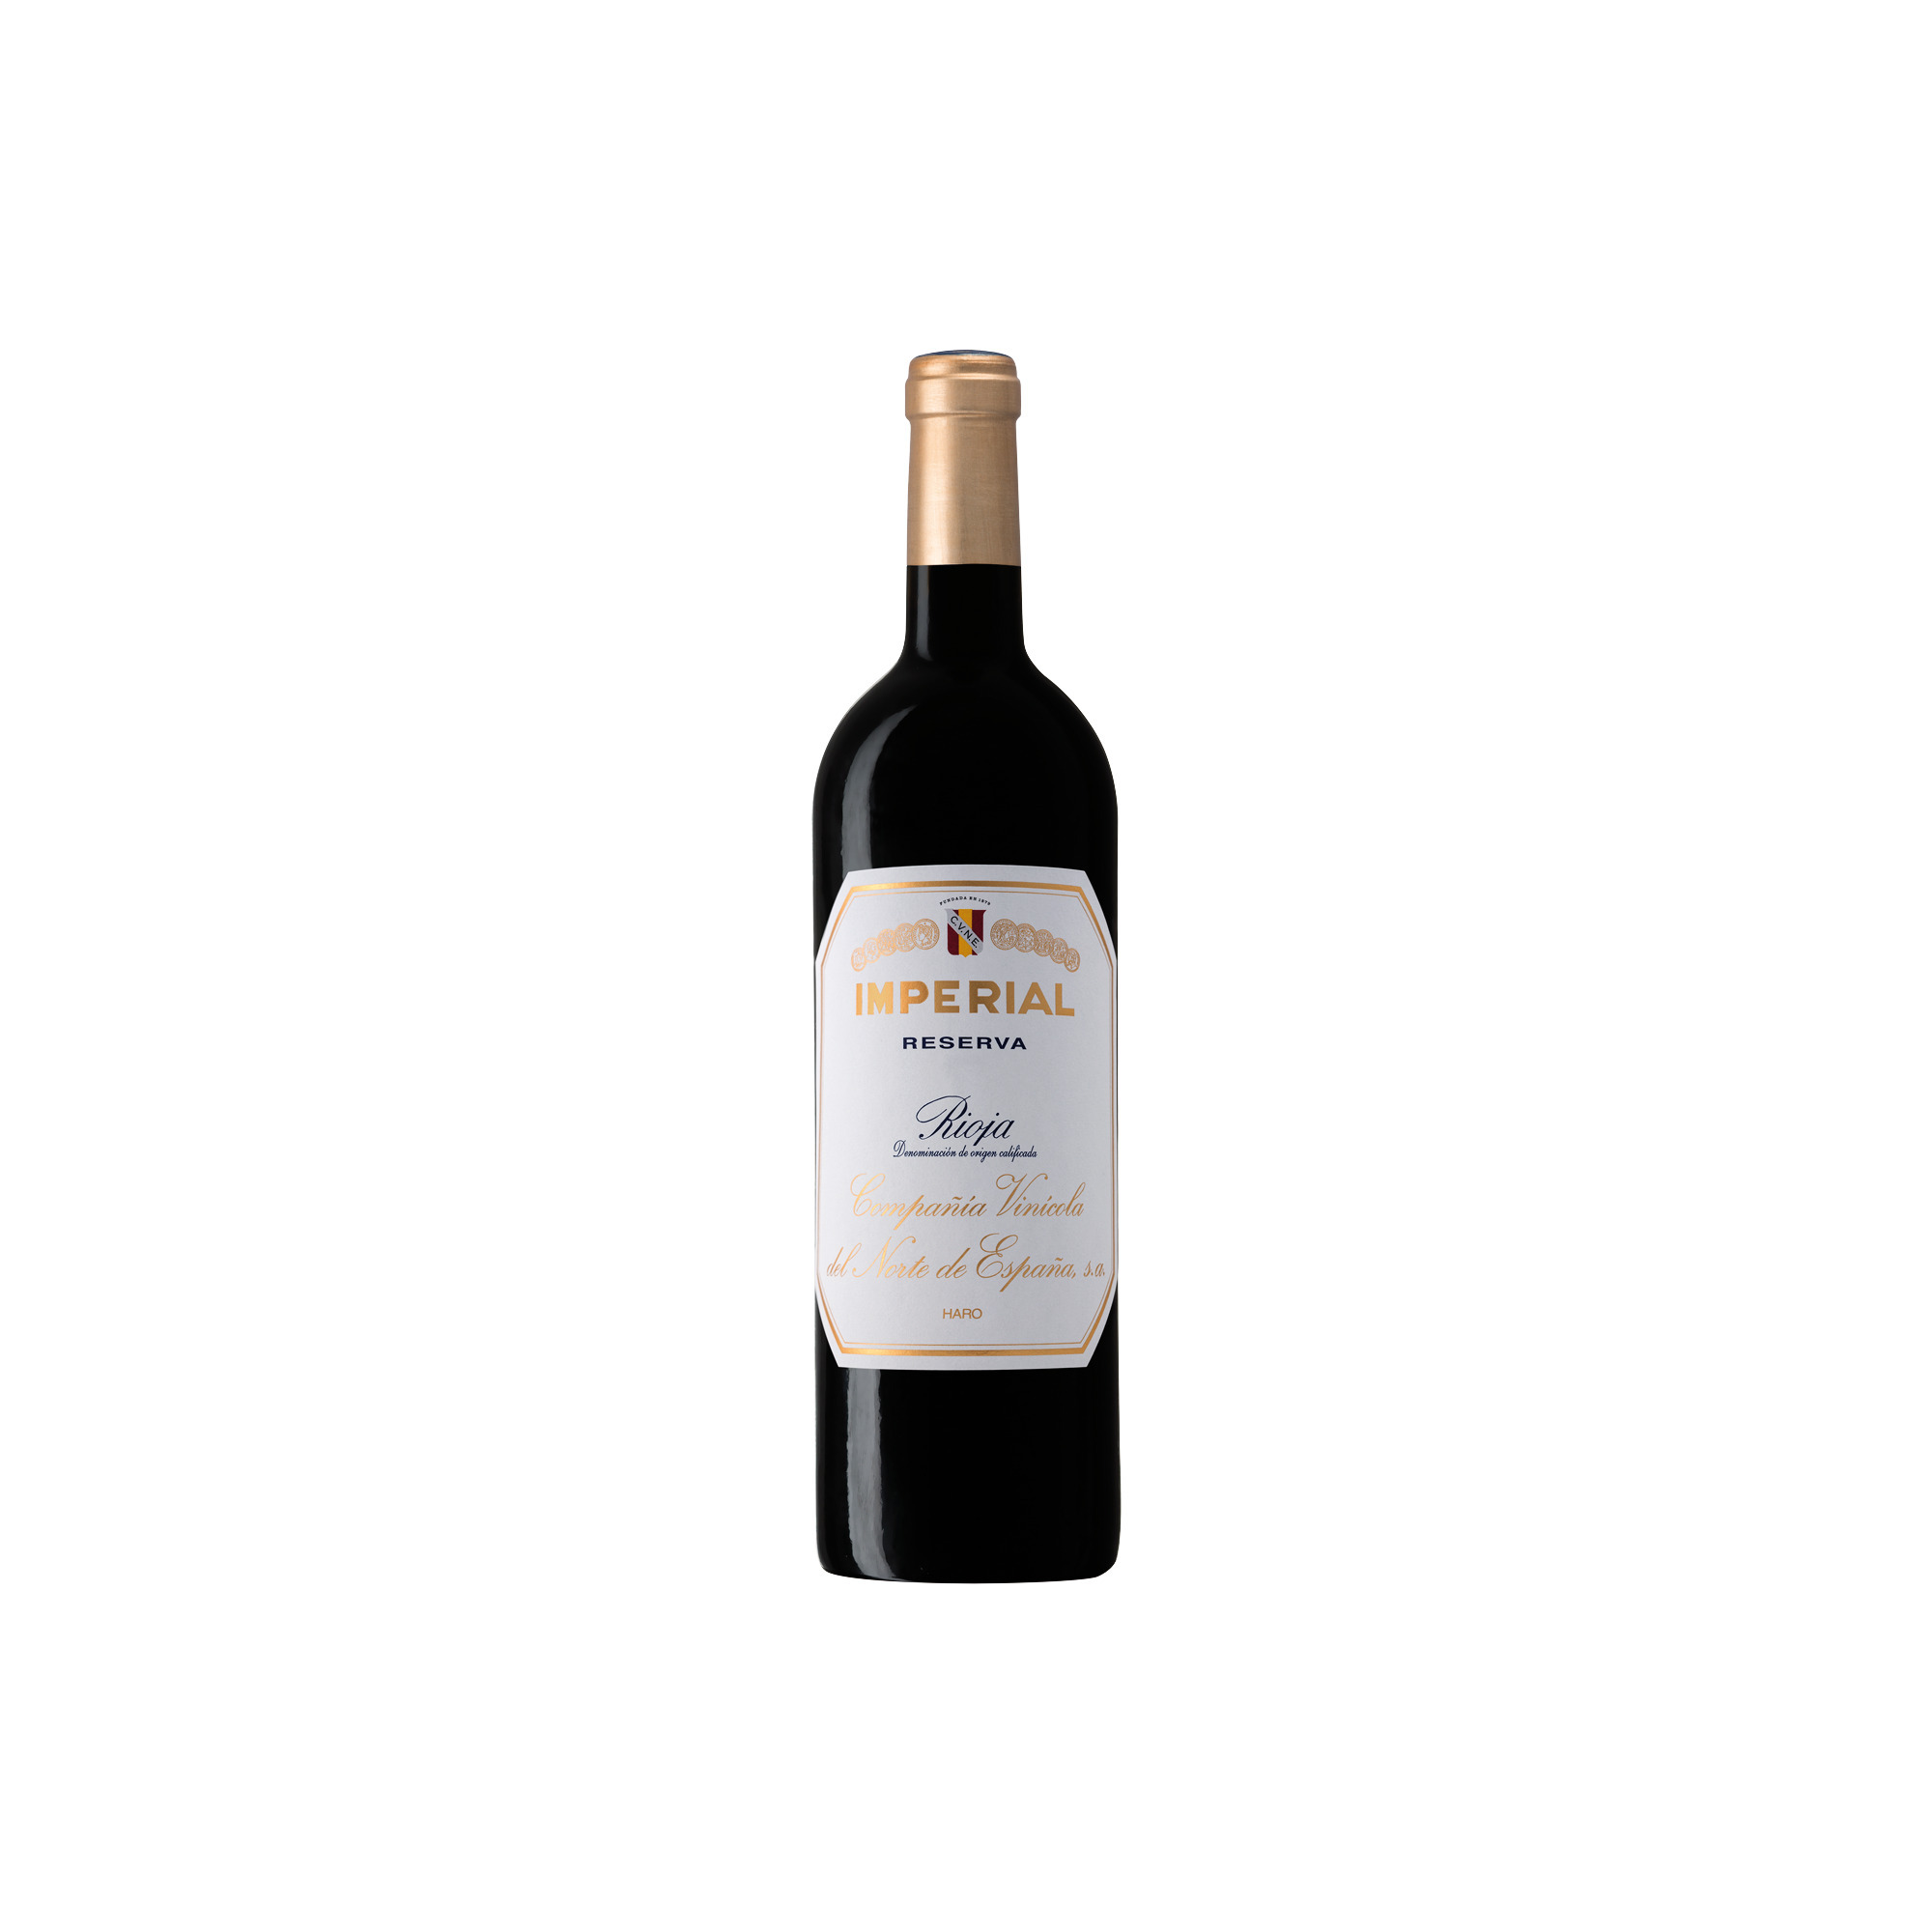 CUNE Rioja Imperial Res. 0,75l, 2018